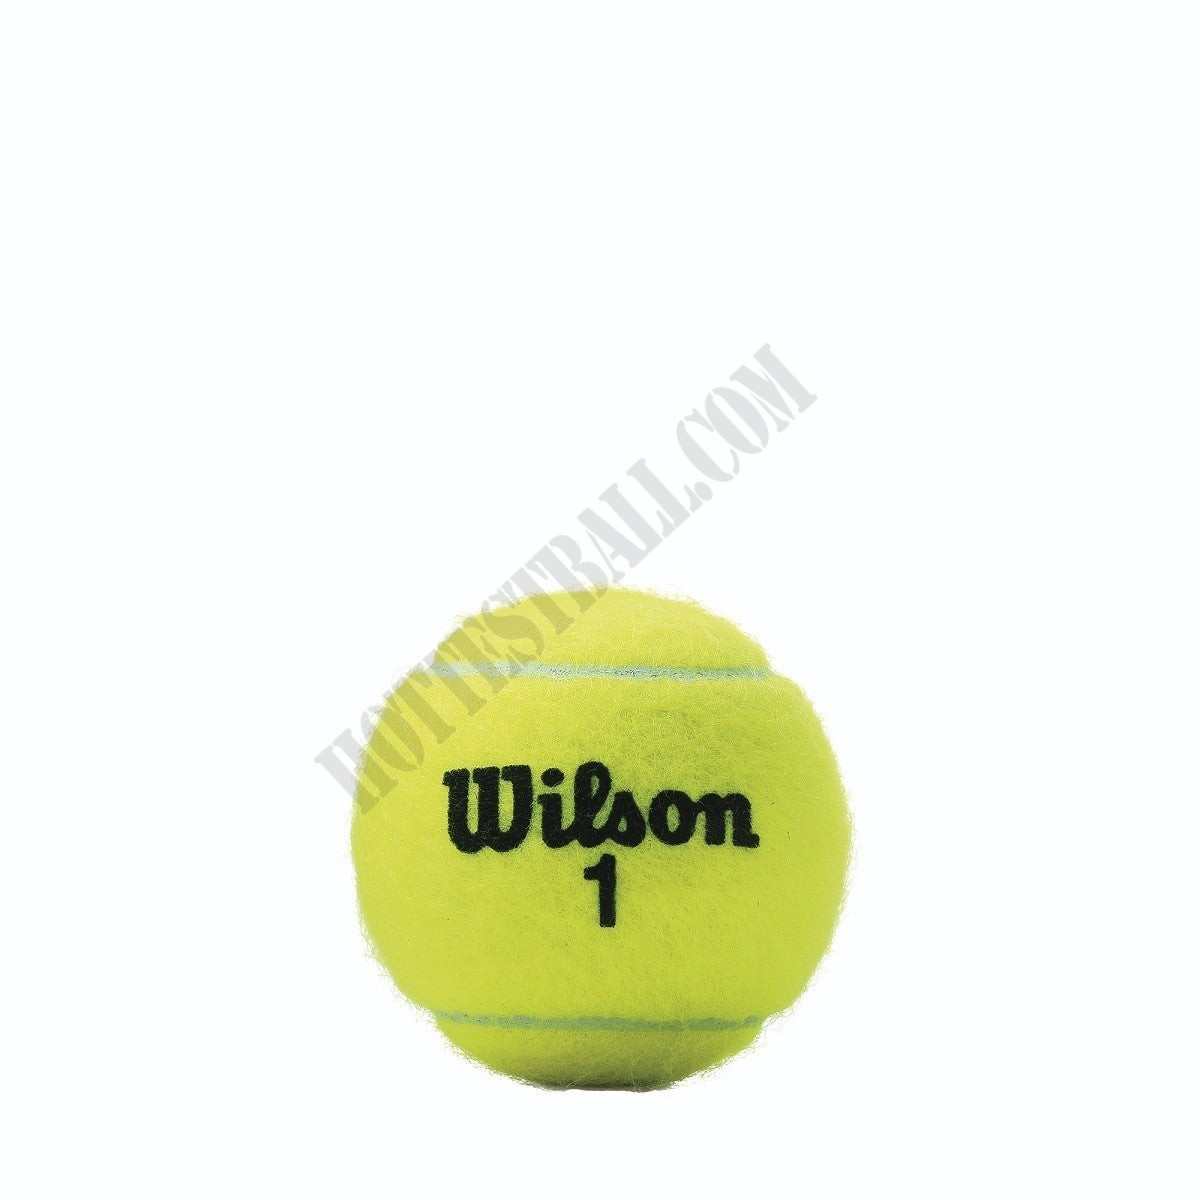 Championship Tennis Balls - Wilson Discount Store - -2